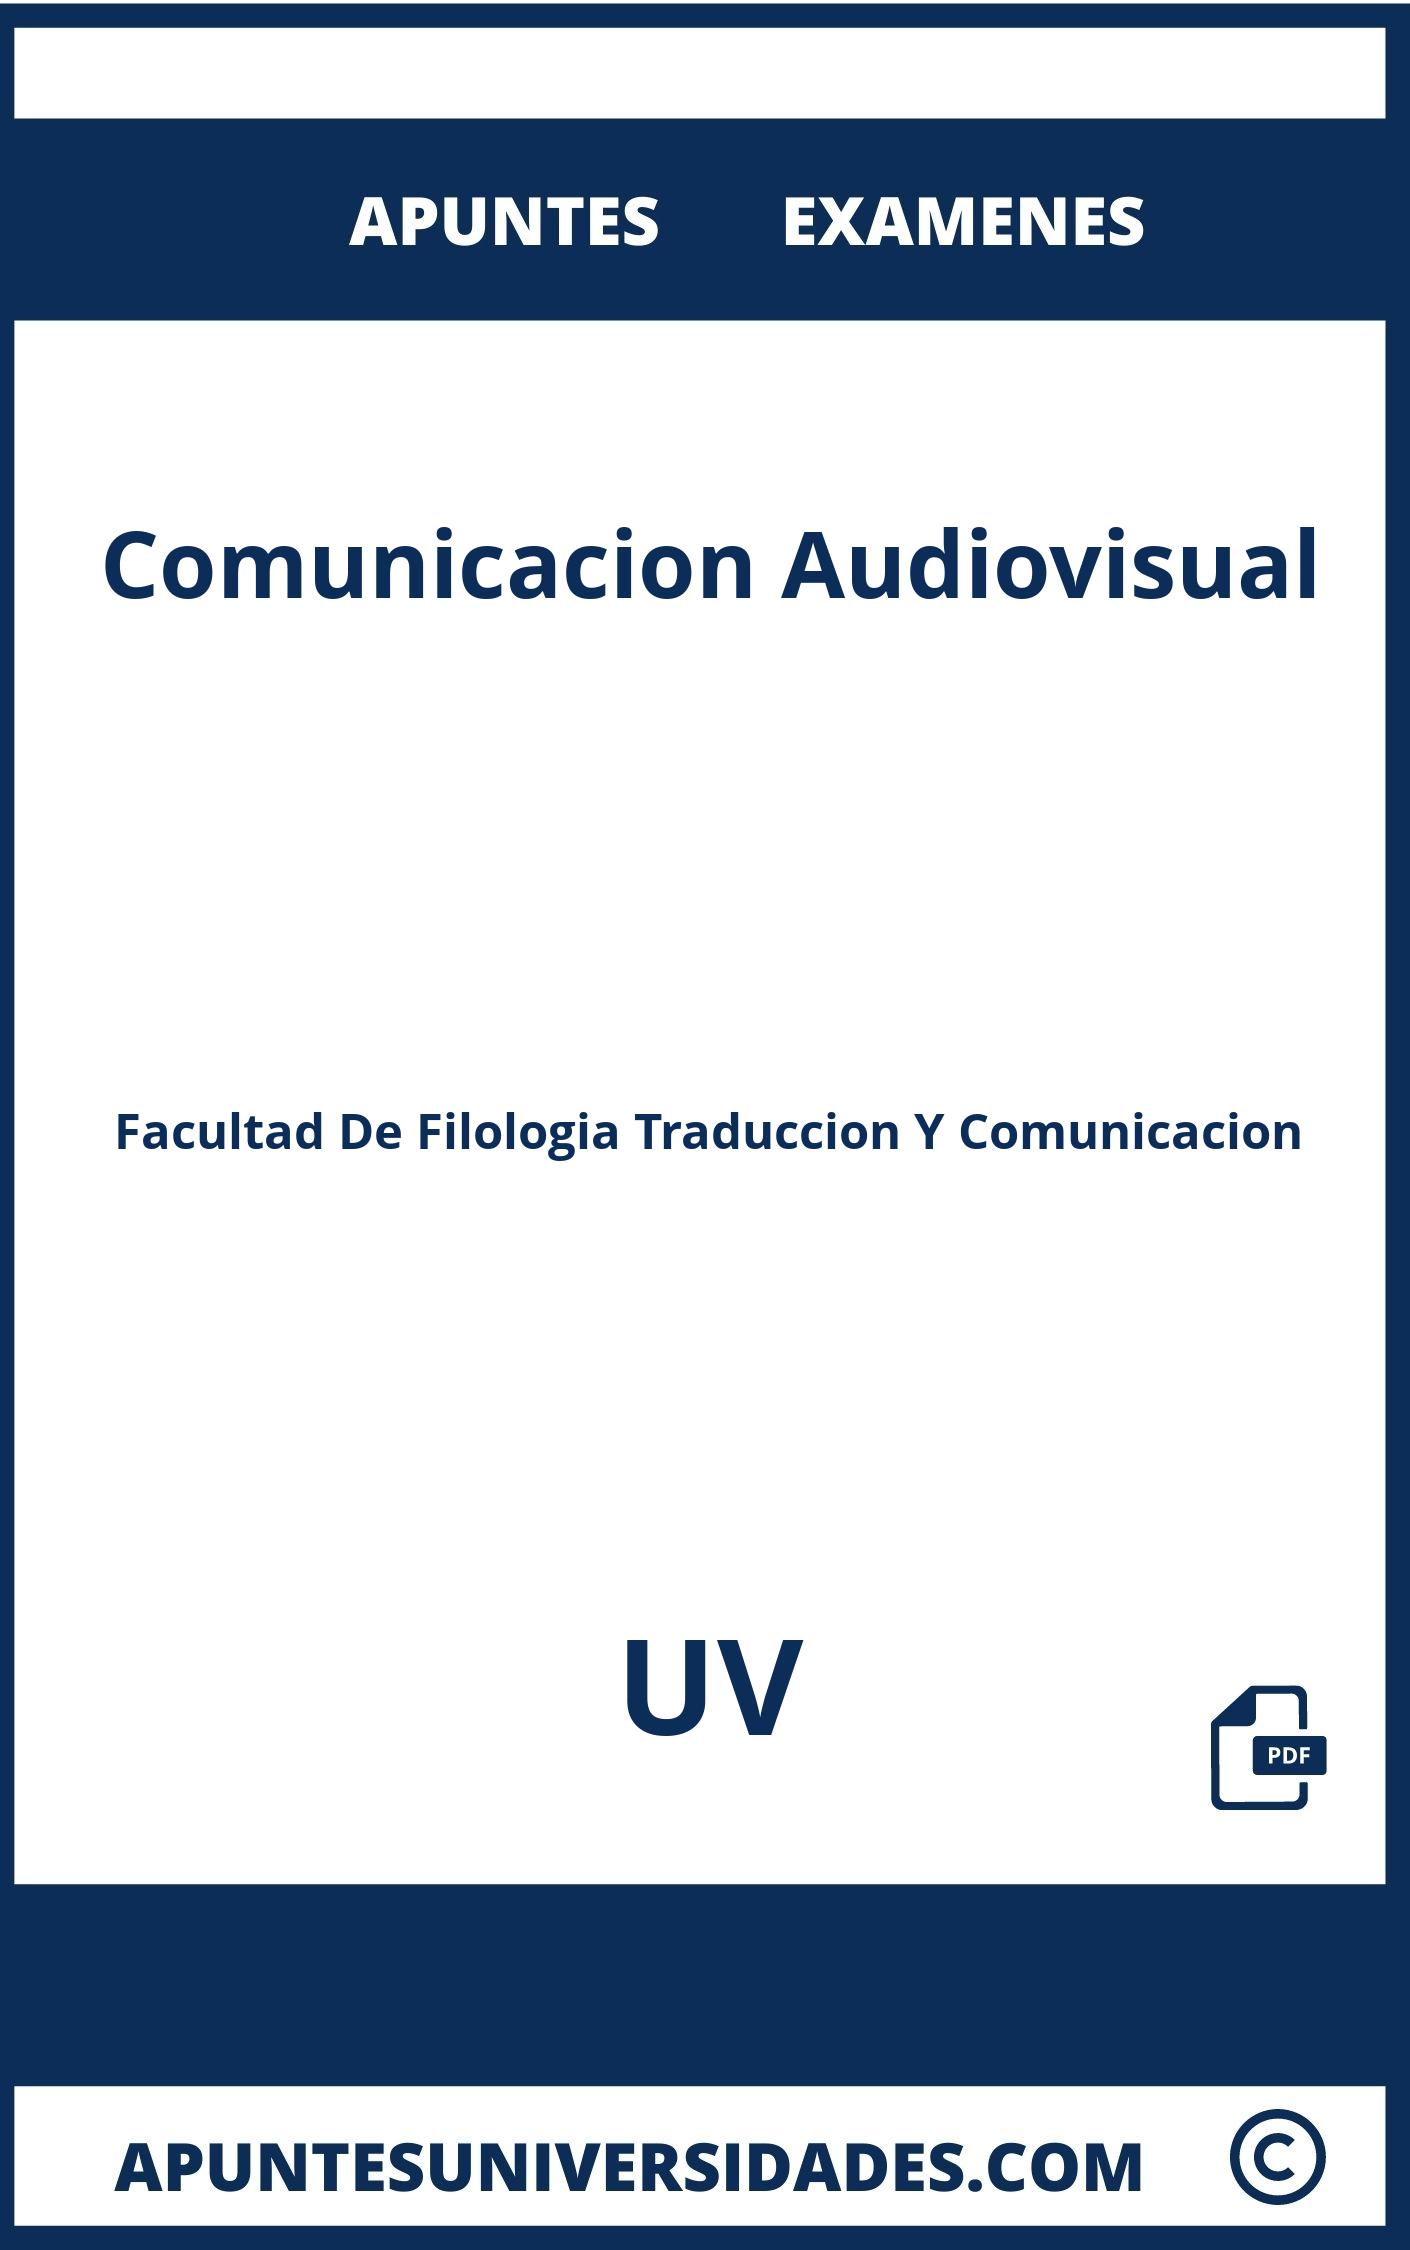 Examenes Apuntes Comunicacion Audiovisual UV